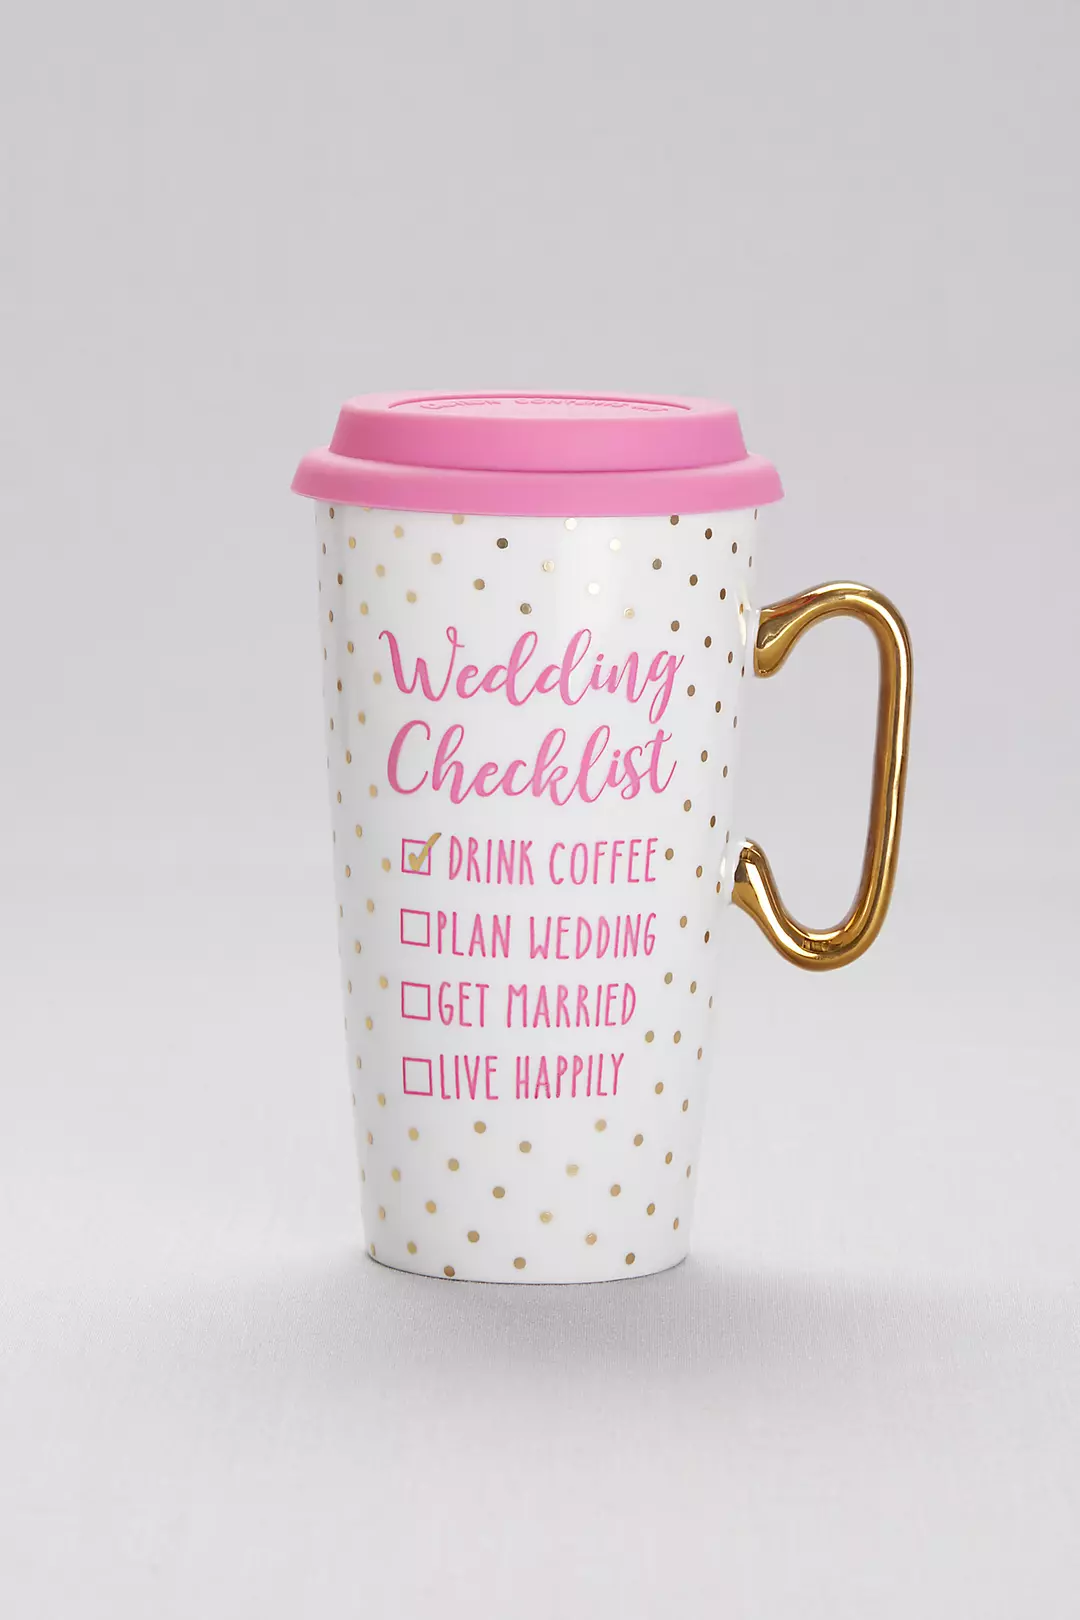 Wedding Checklist Coffee Mug Image